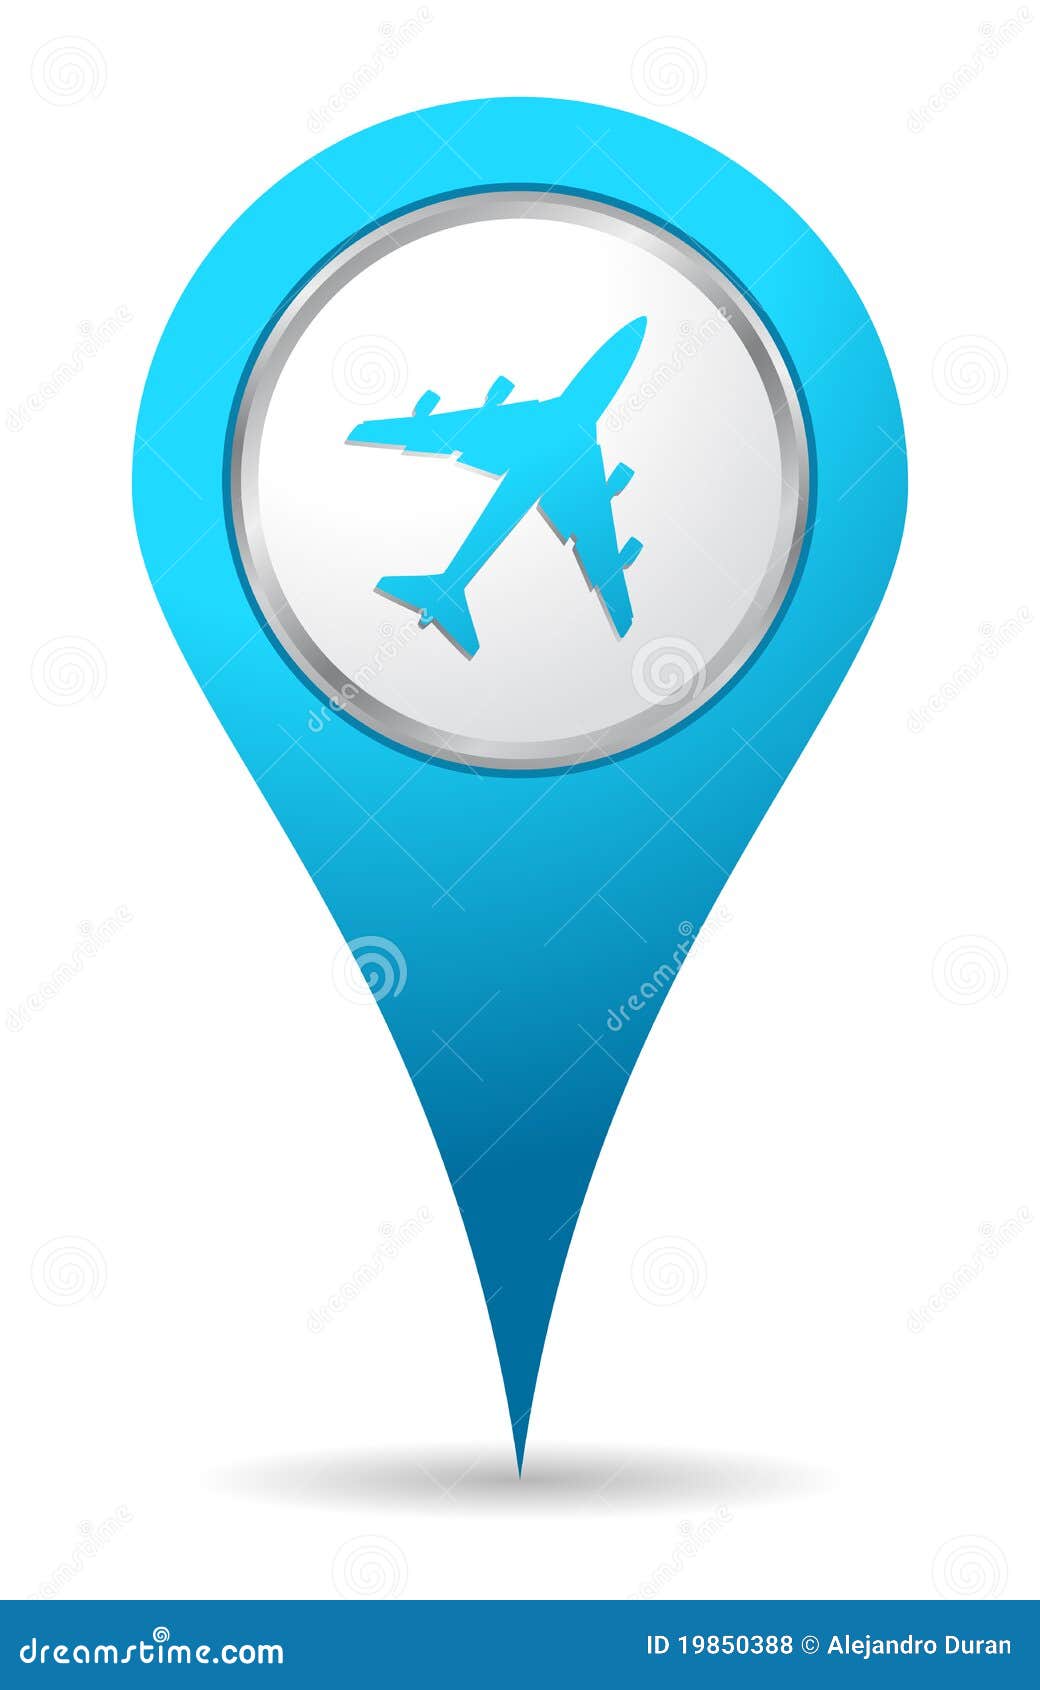 location airplane icon